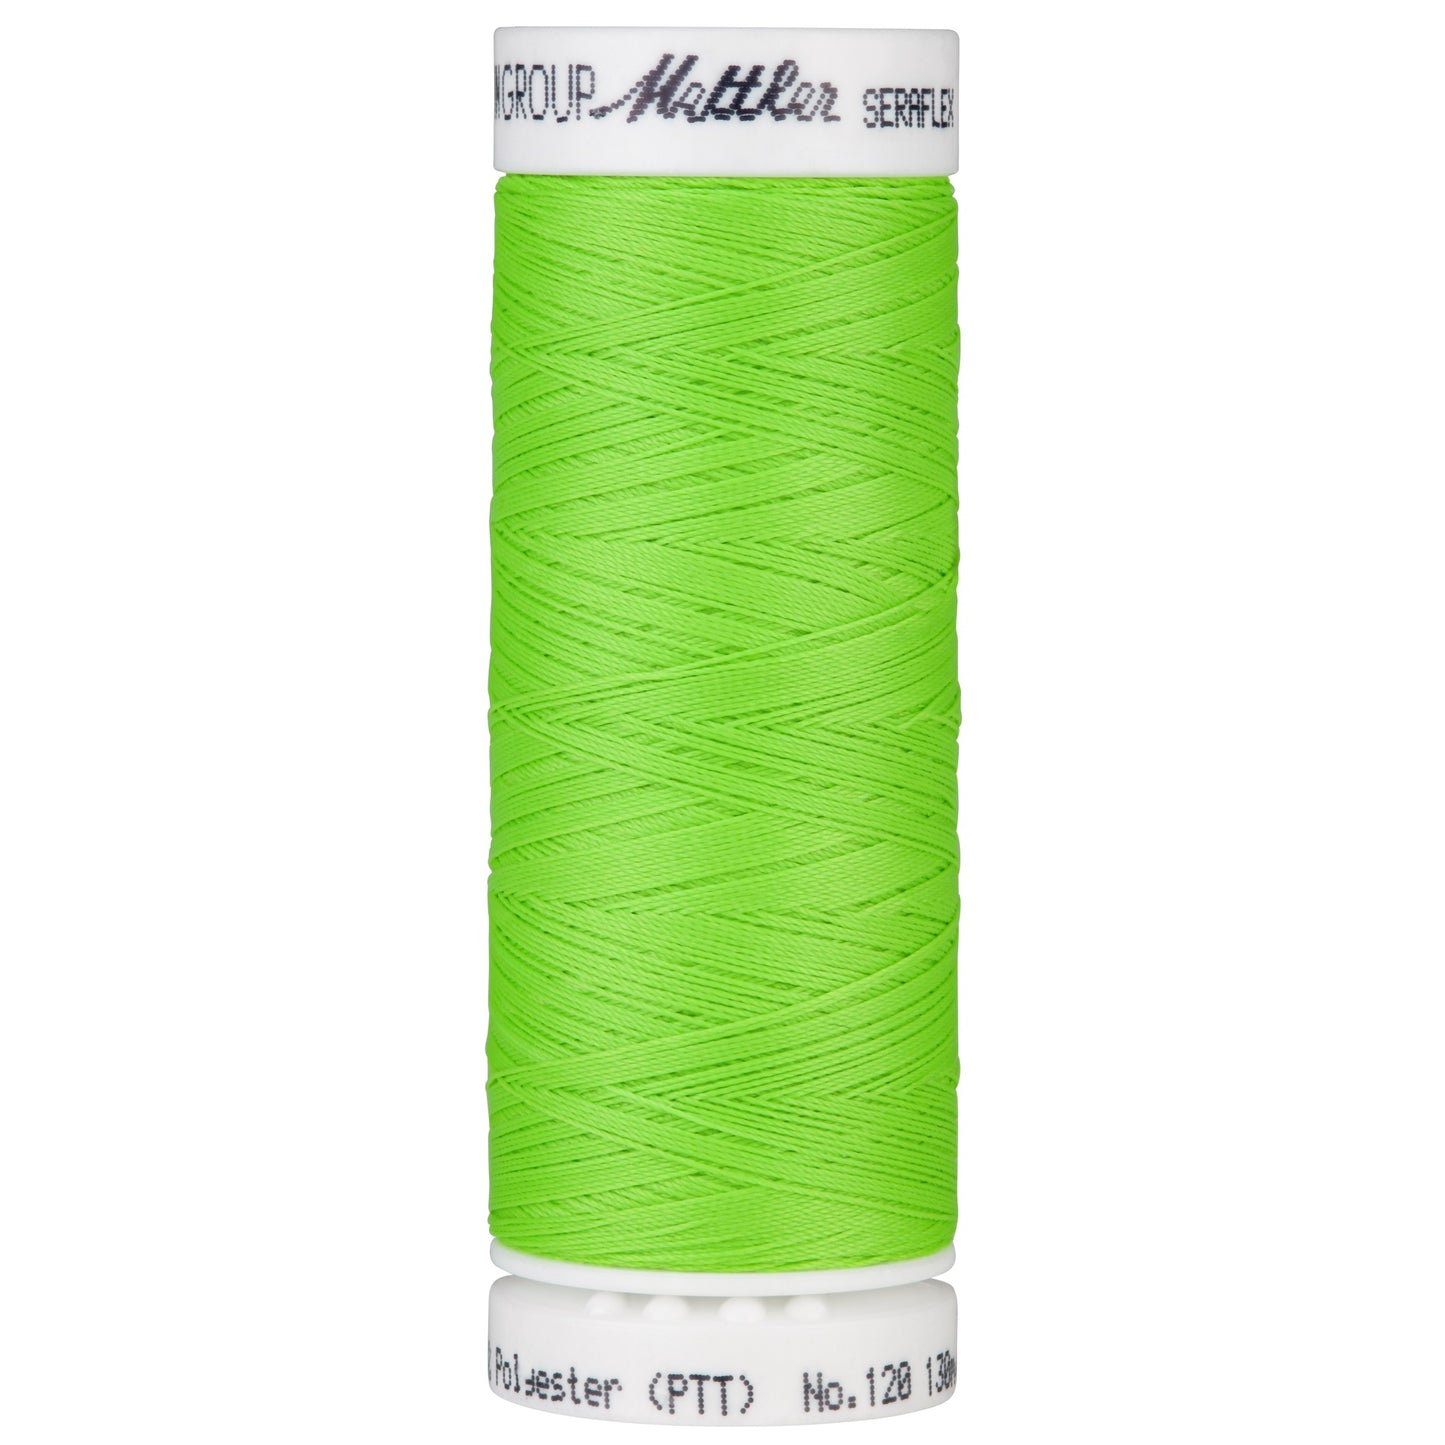 Seraflex - Mettler - Stretch Thread - For Stretchy Seams - 130 Meters - Green Viper